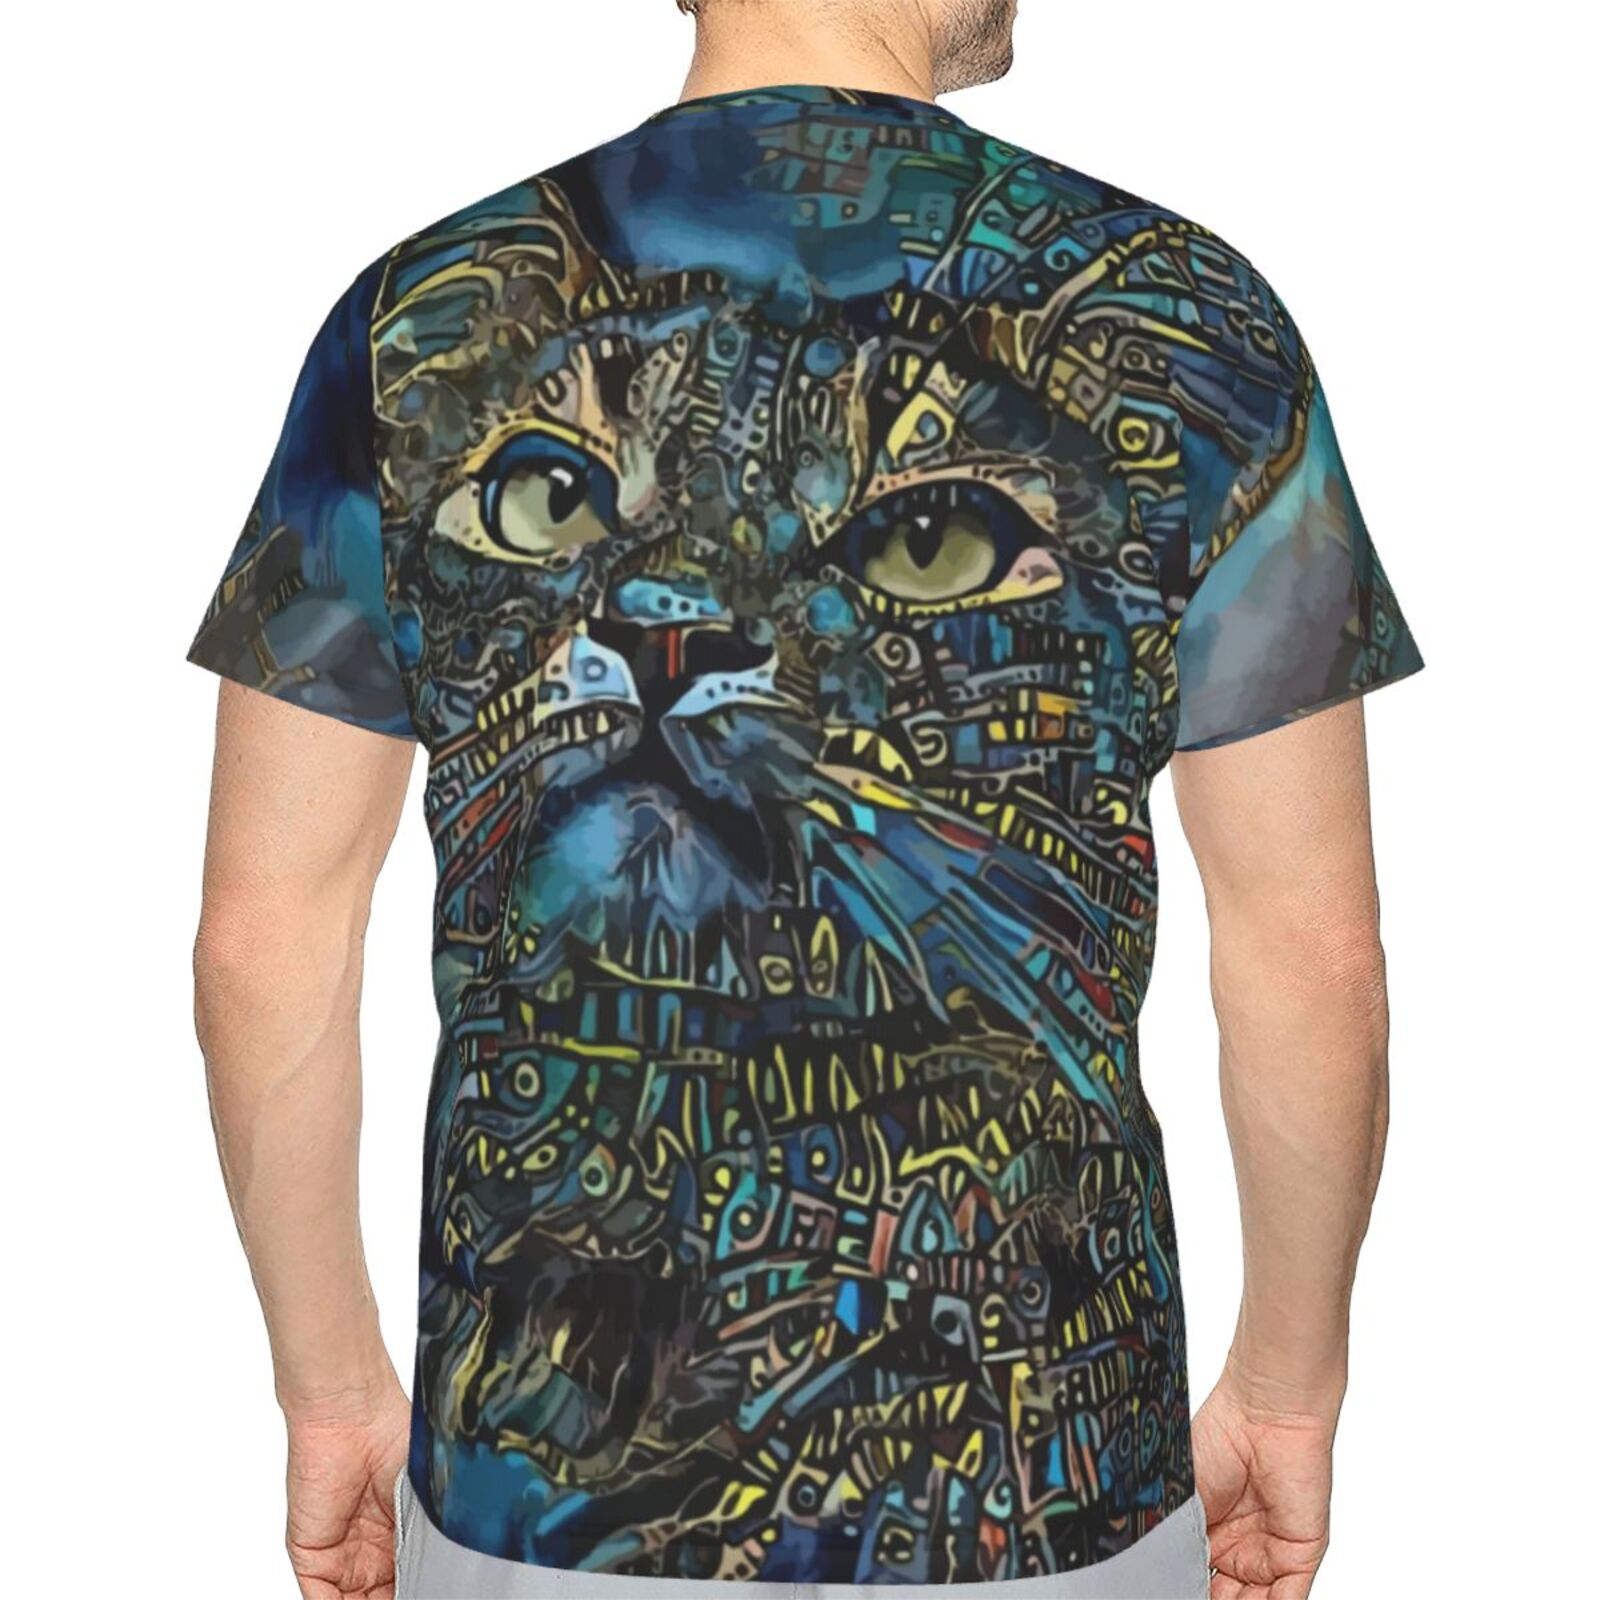 Tzany Cat Mix Mdeia Elements Classic T-shirt